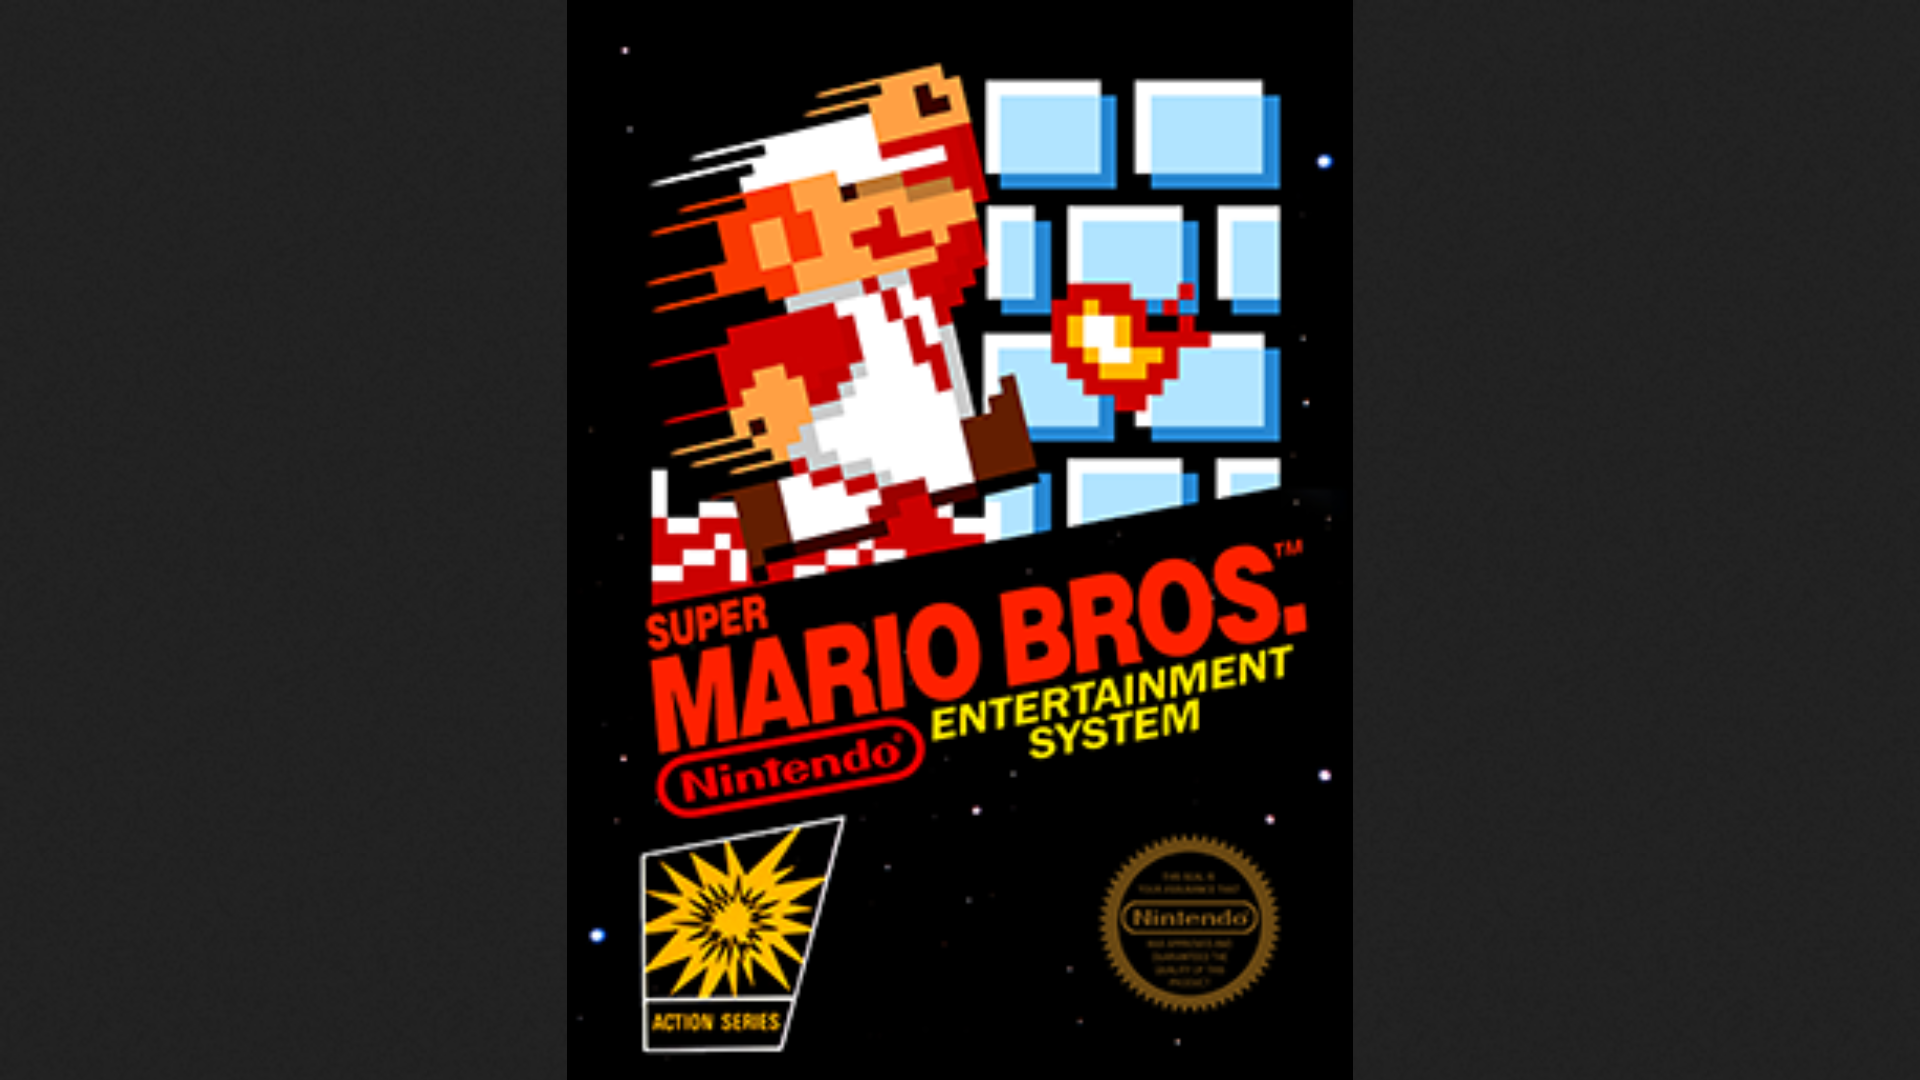 New world record set in Super Mario Bros.